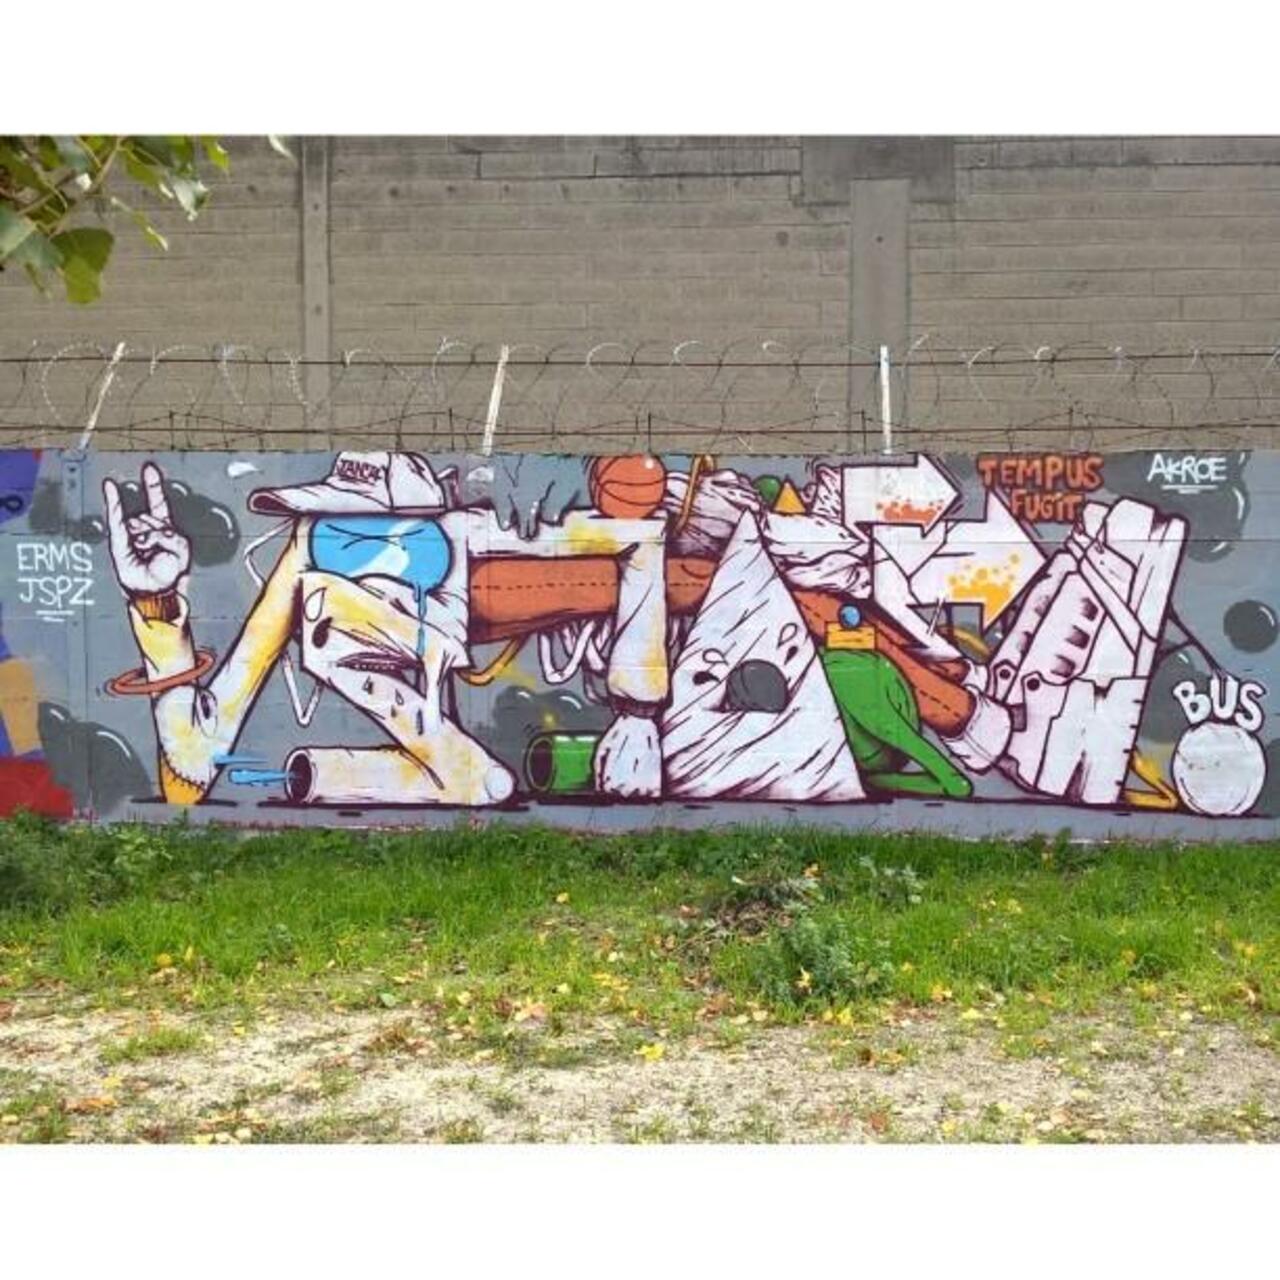 KRSN
#JanGaret #streetart #graffiti #graff #art #fatcap #bombing #sprayart #spraycanart #wallart #handstyle #letter… http://t.co/y5VJJII3Ma